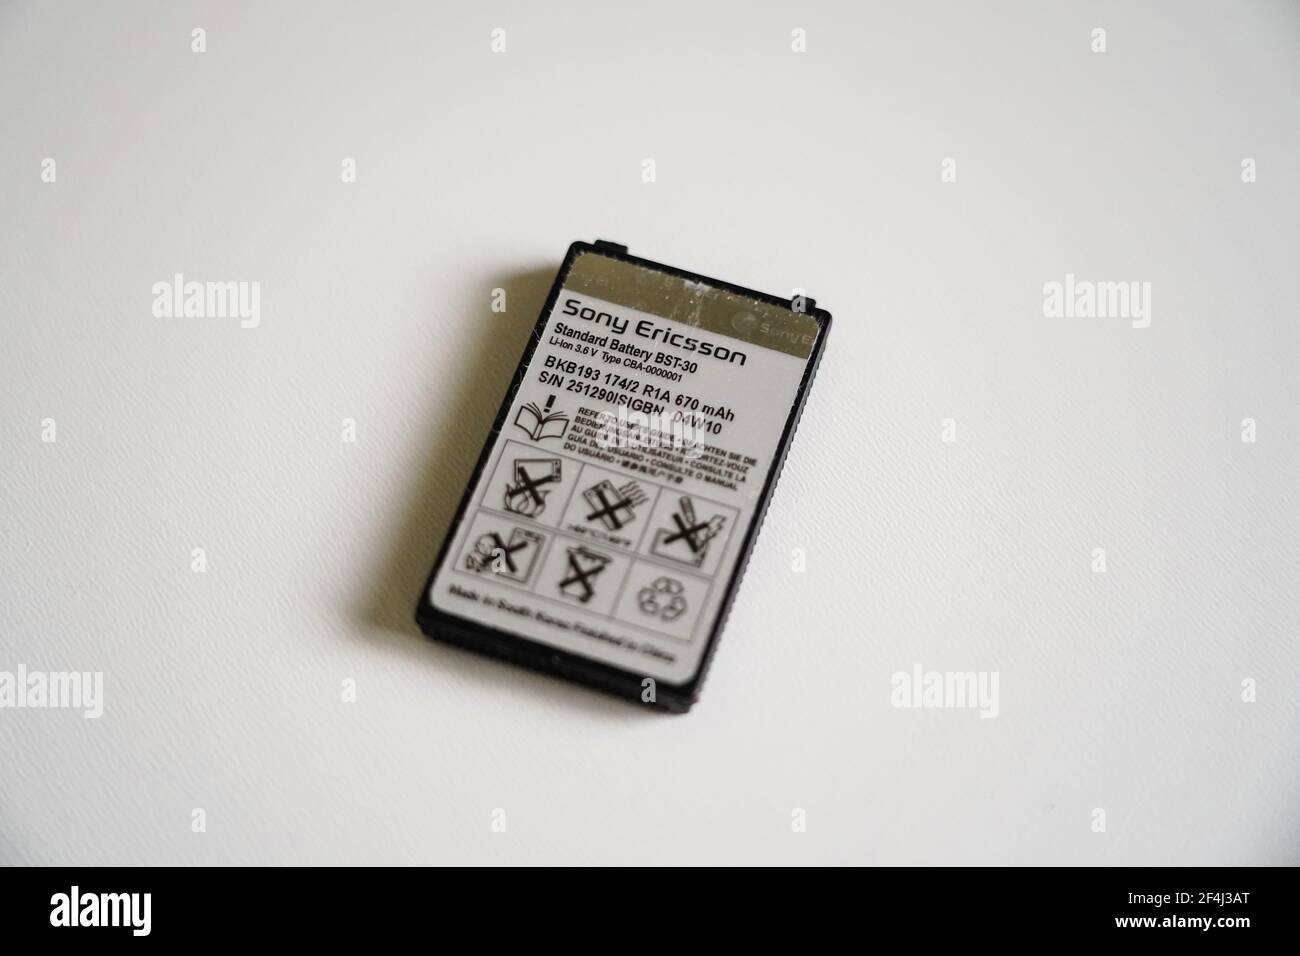 sony ericsson phone battery Stock Photo - Alamy